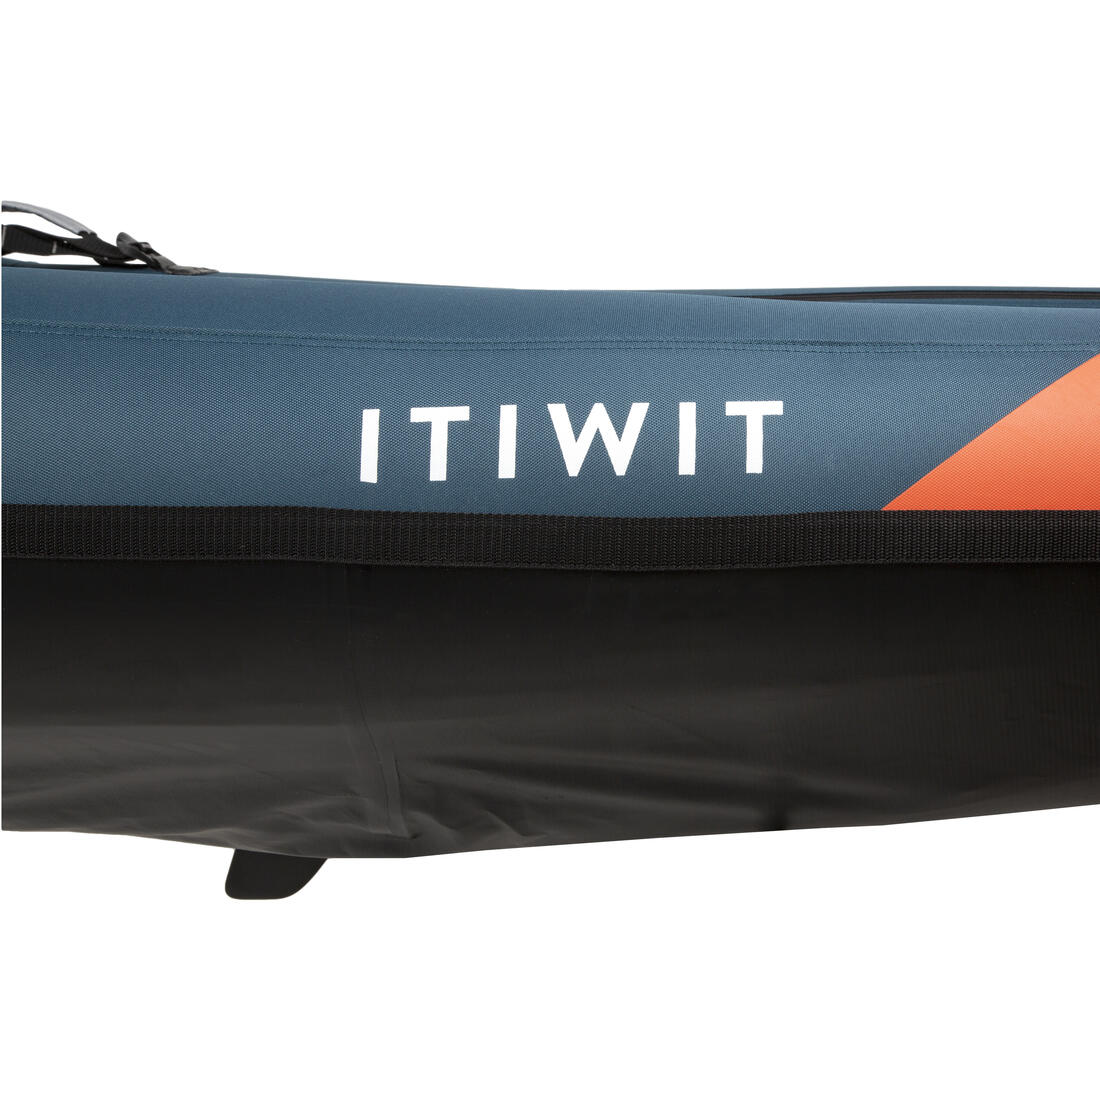 ITIWIT (イティウィ) カヌー・カヤック 空気式ツーリング 1人用